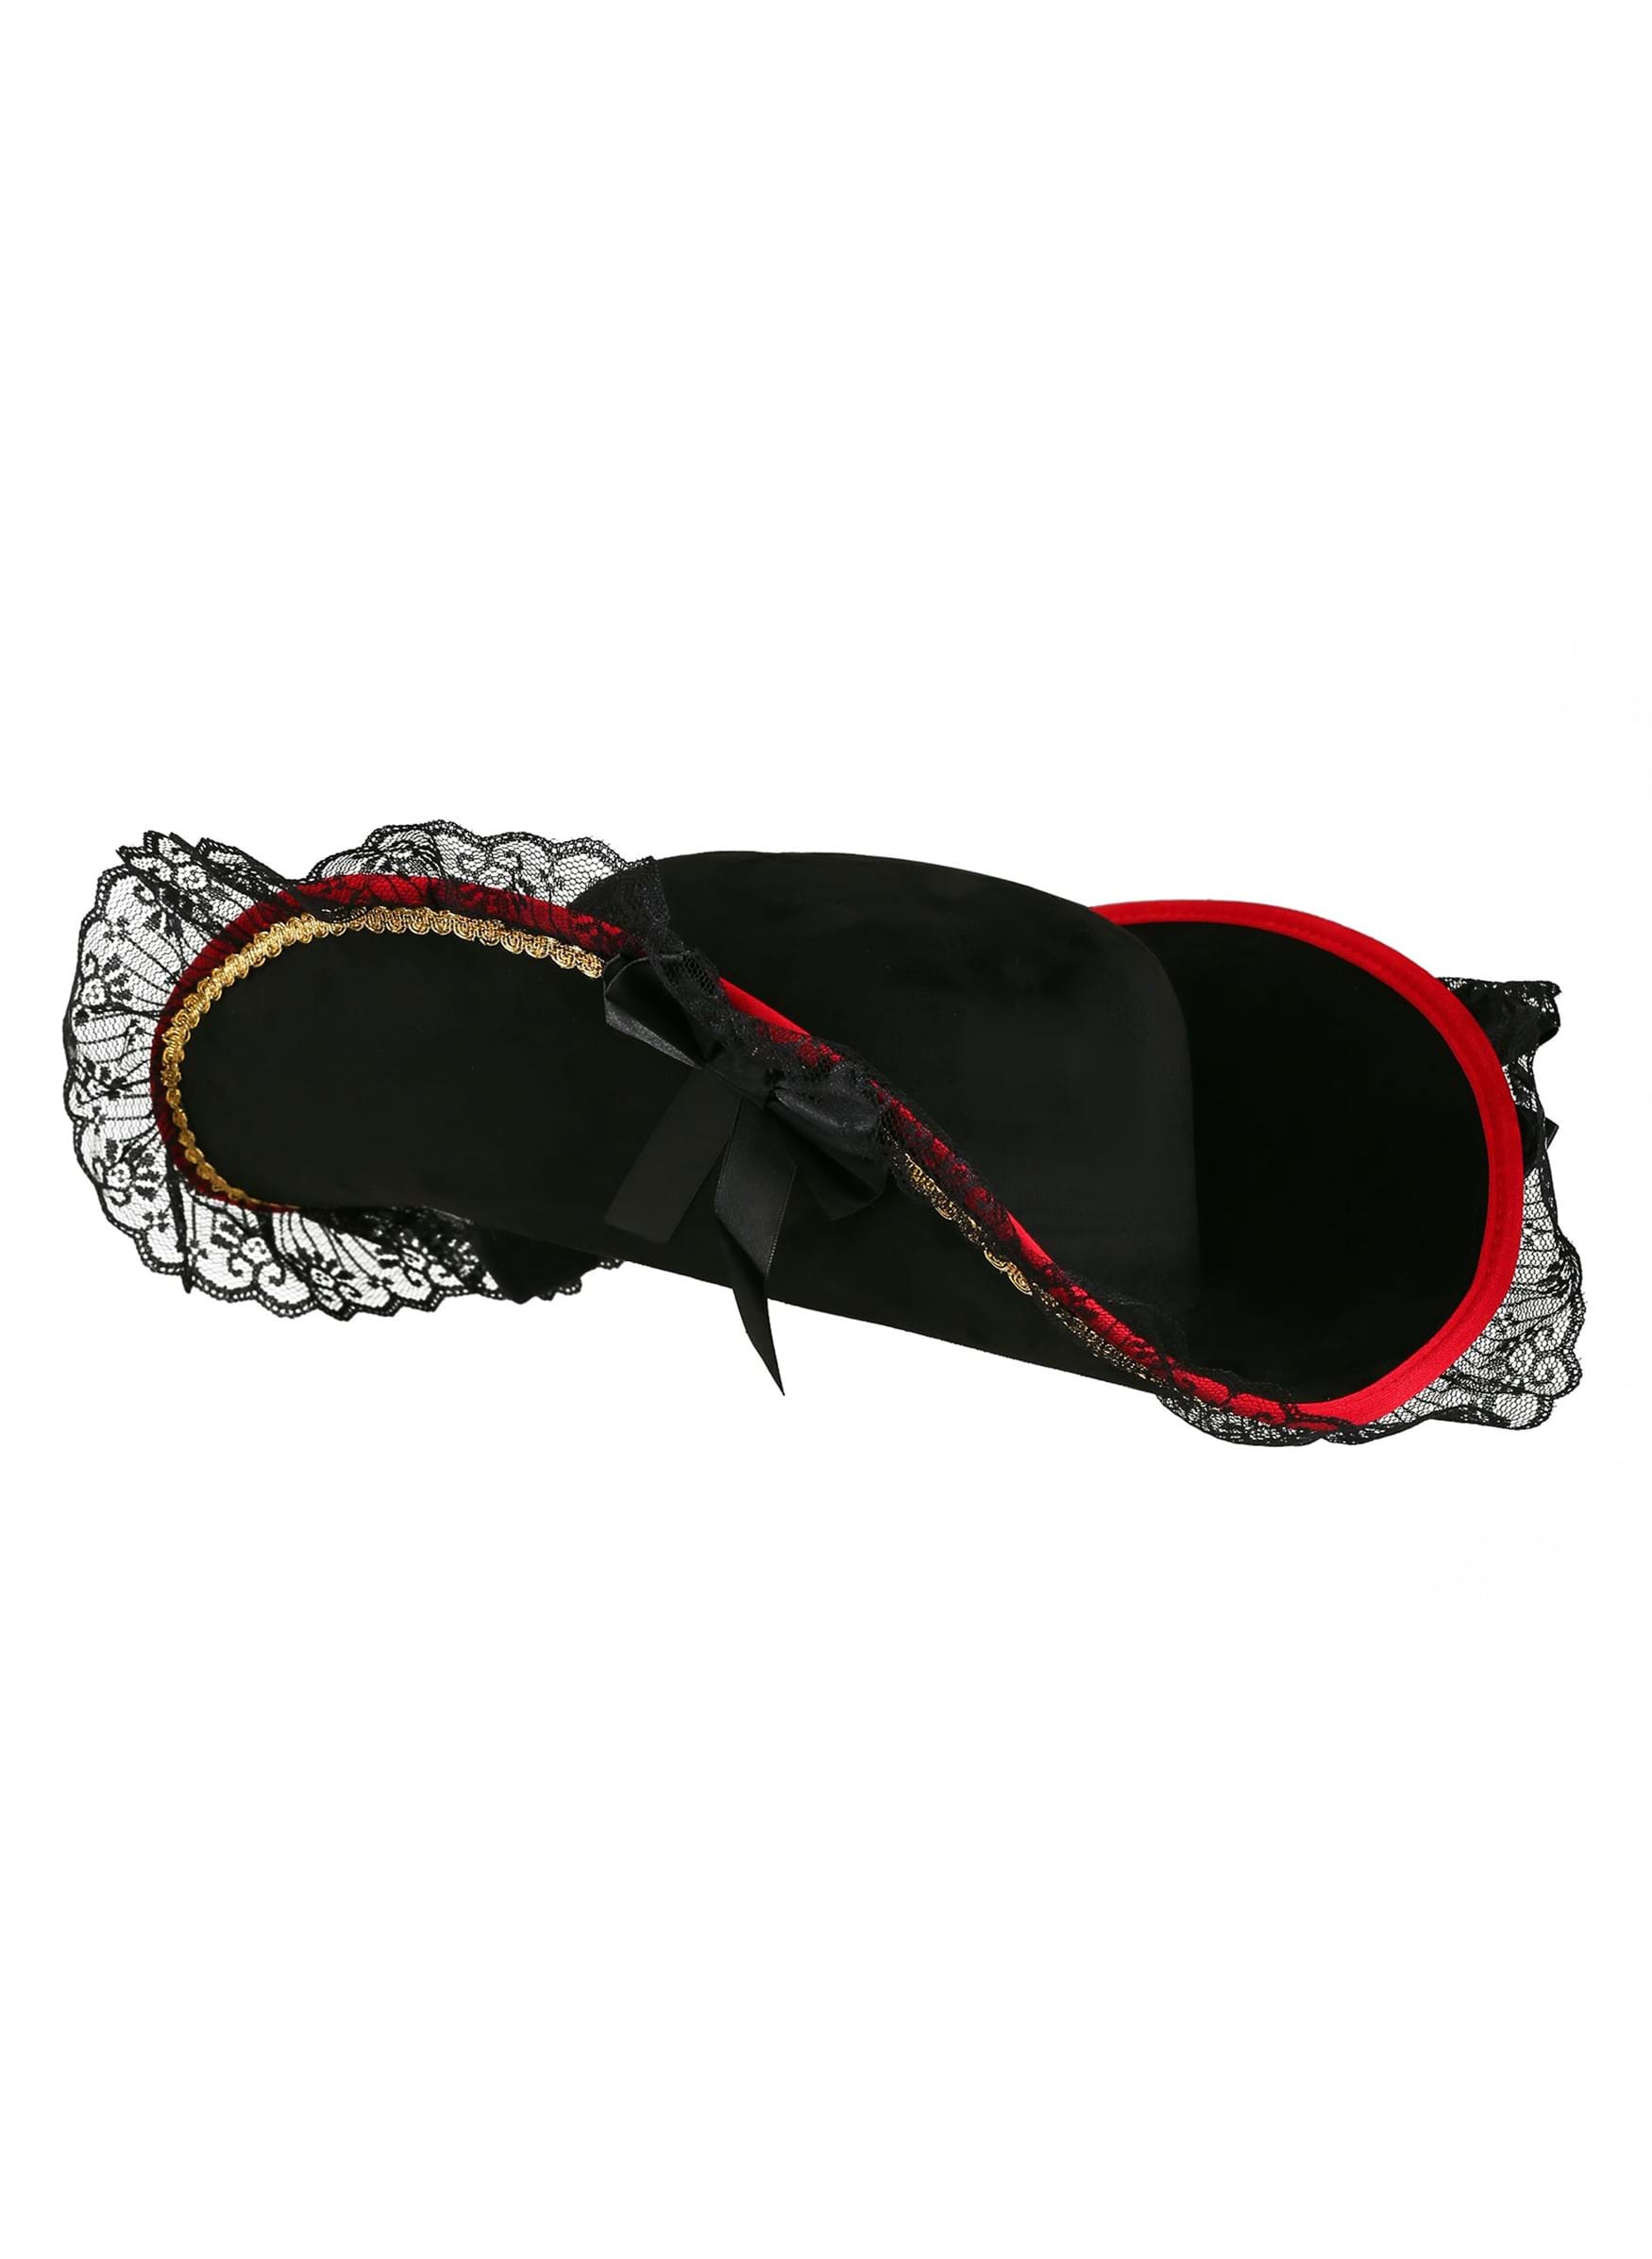 Lady Buccaneer Black Fancy Dress Costume Hat Accessory